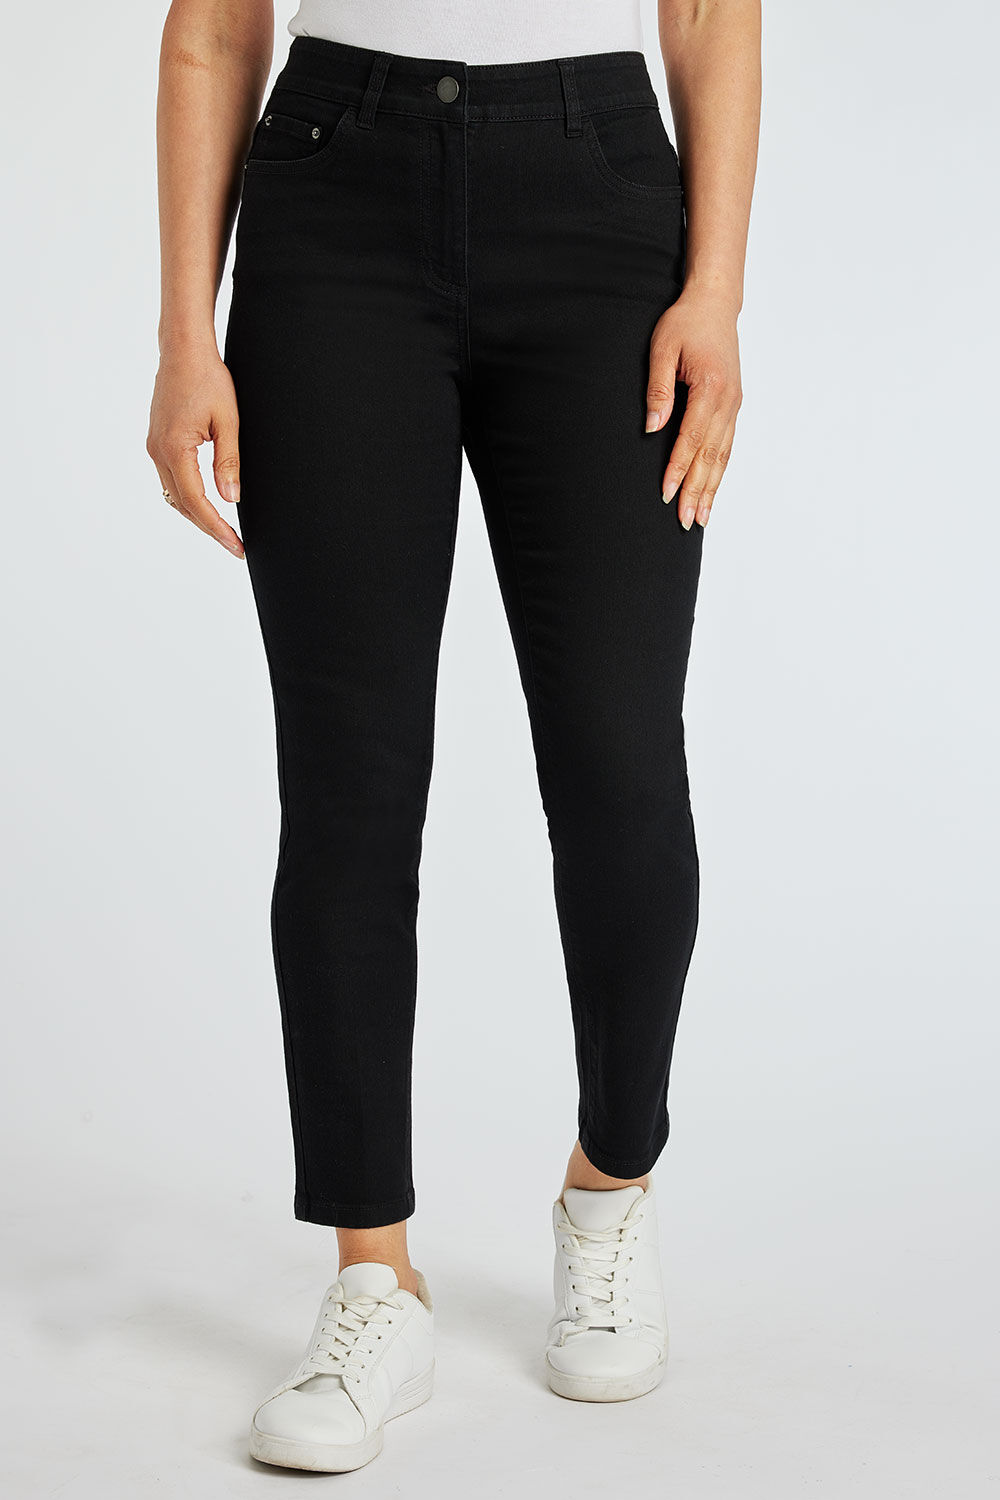 Bonmarche Black The Susie Slim Leg Jeans, Size: 18